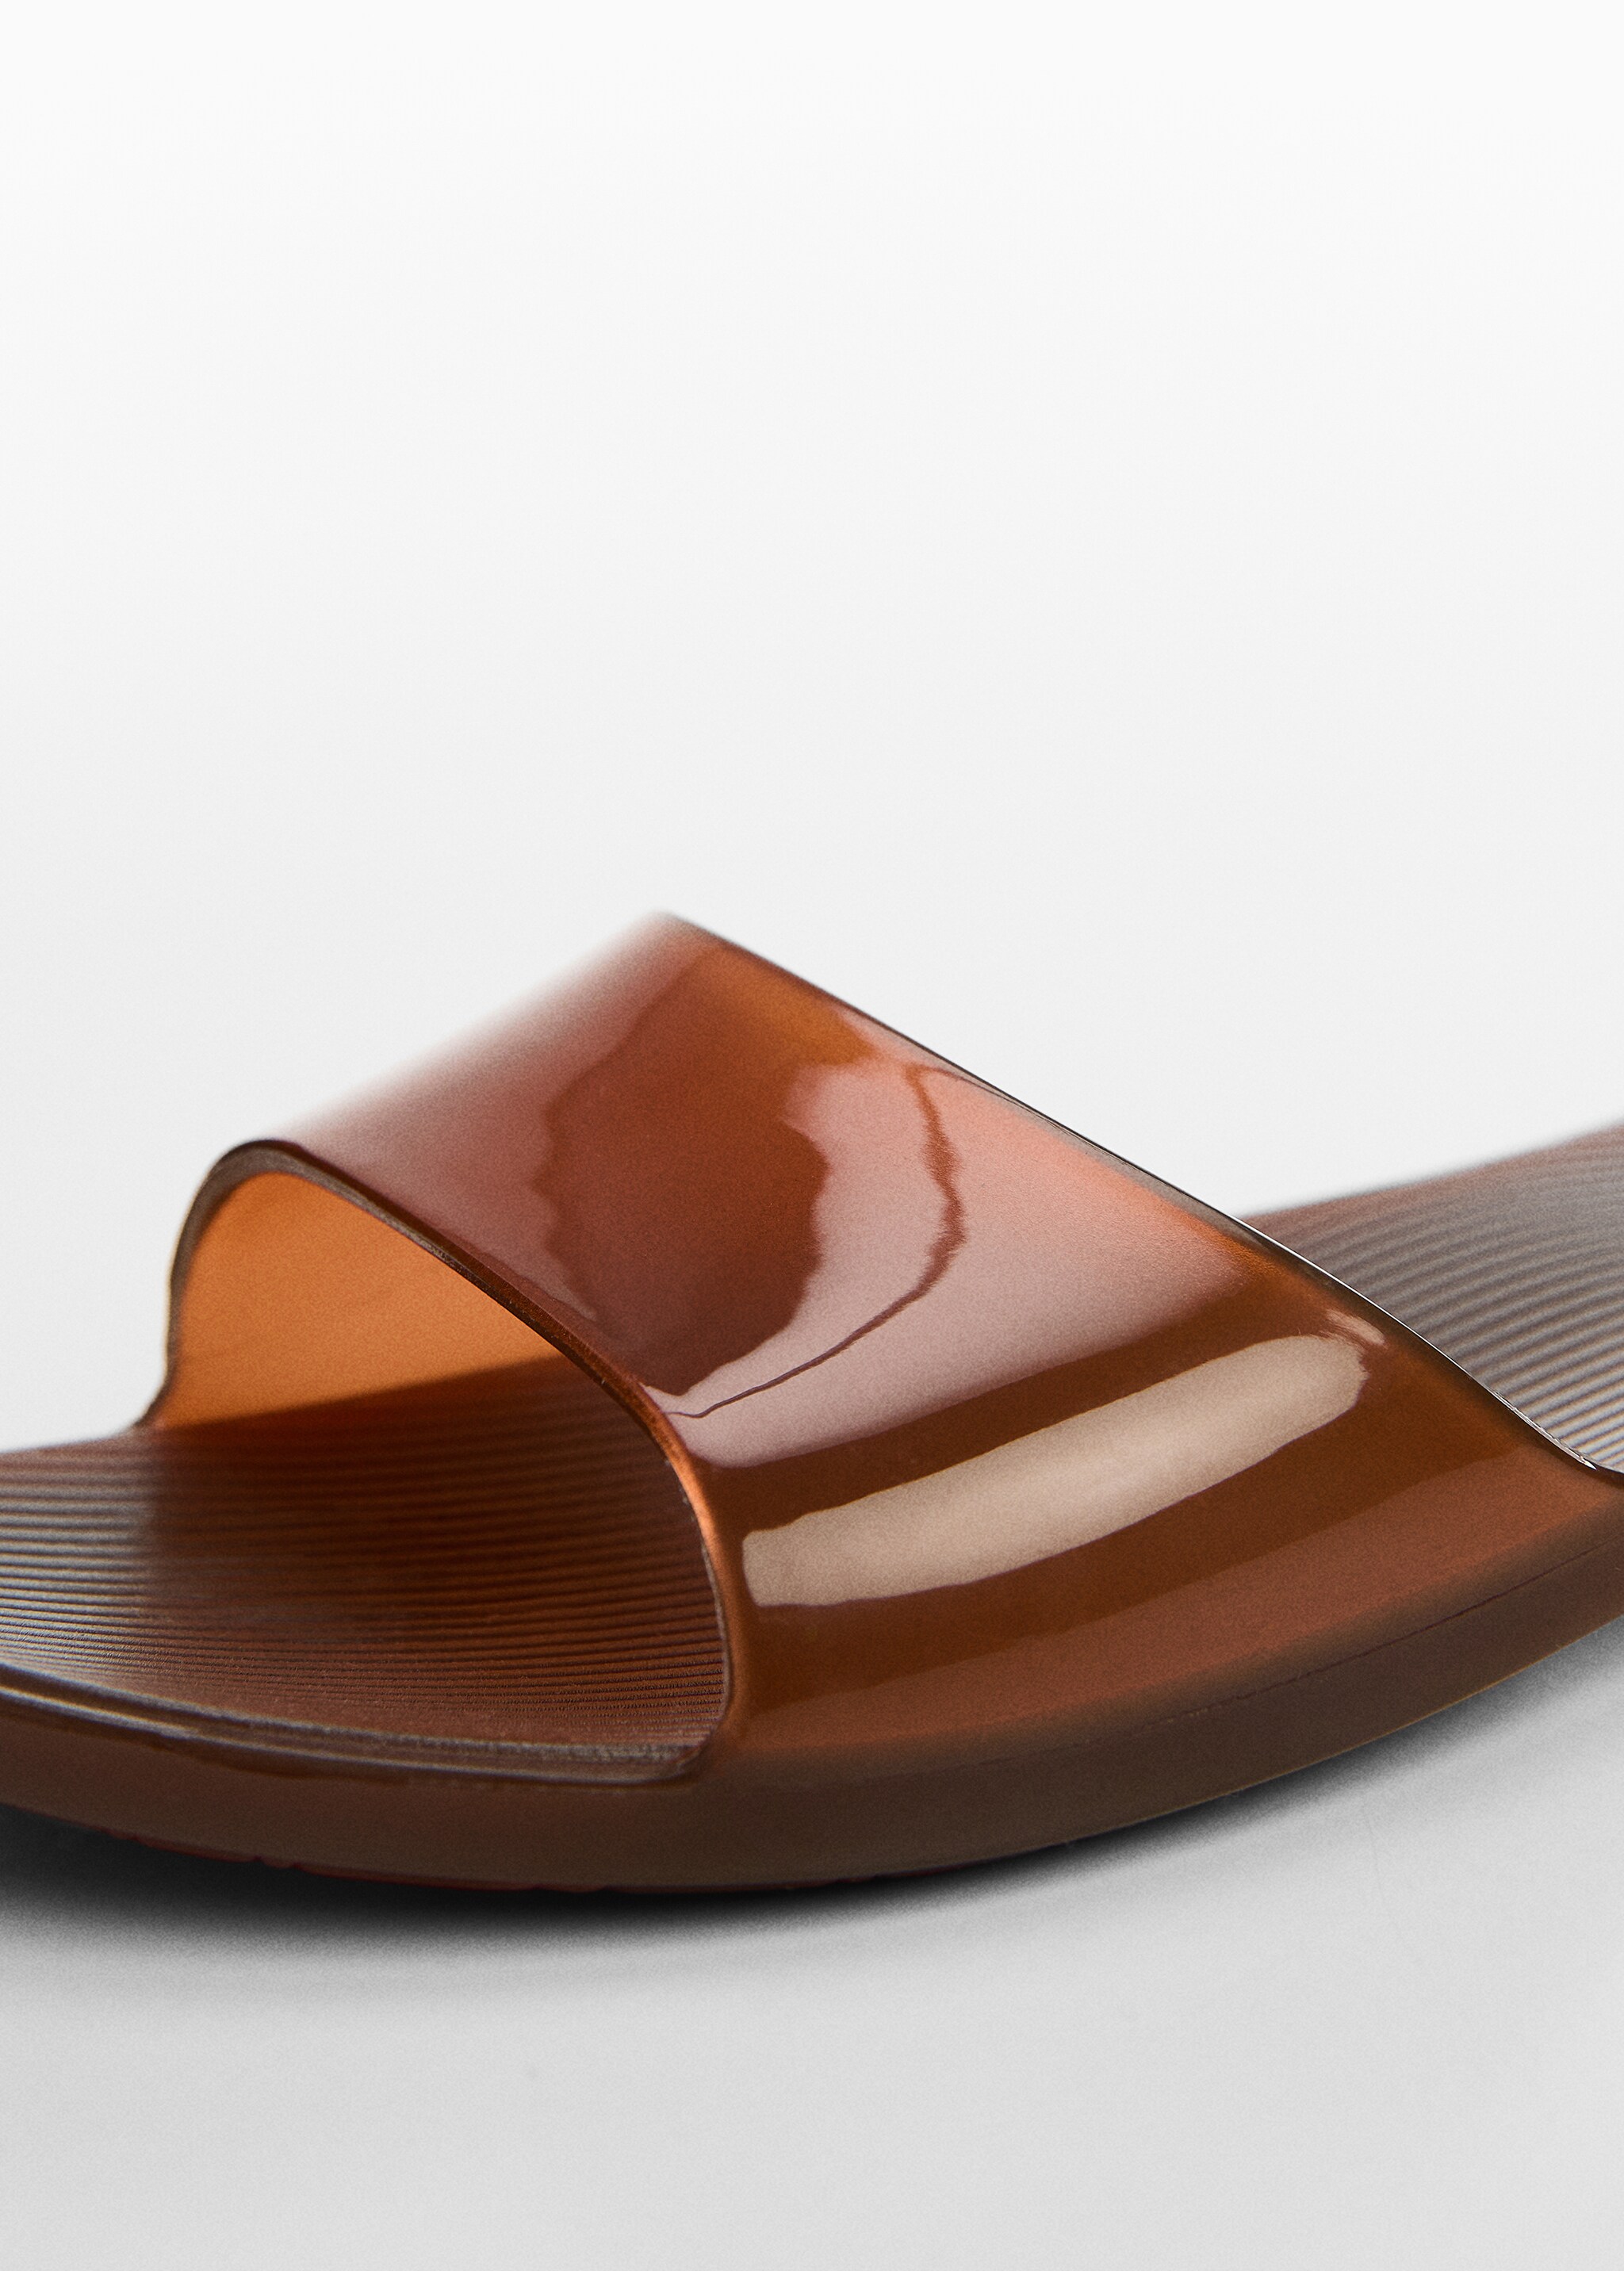 Semitransparent strap sandal - Details of the article 1